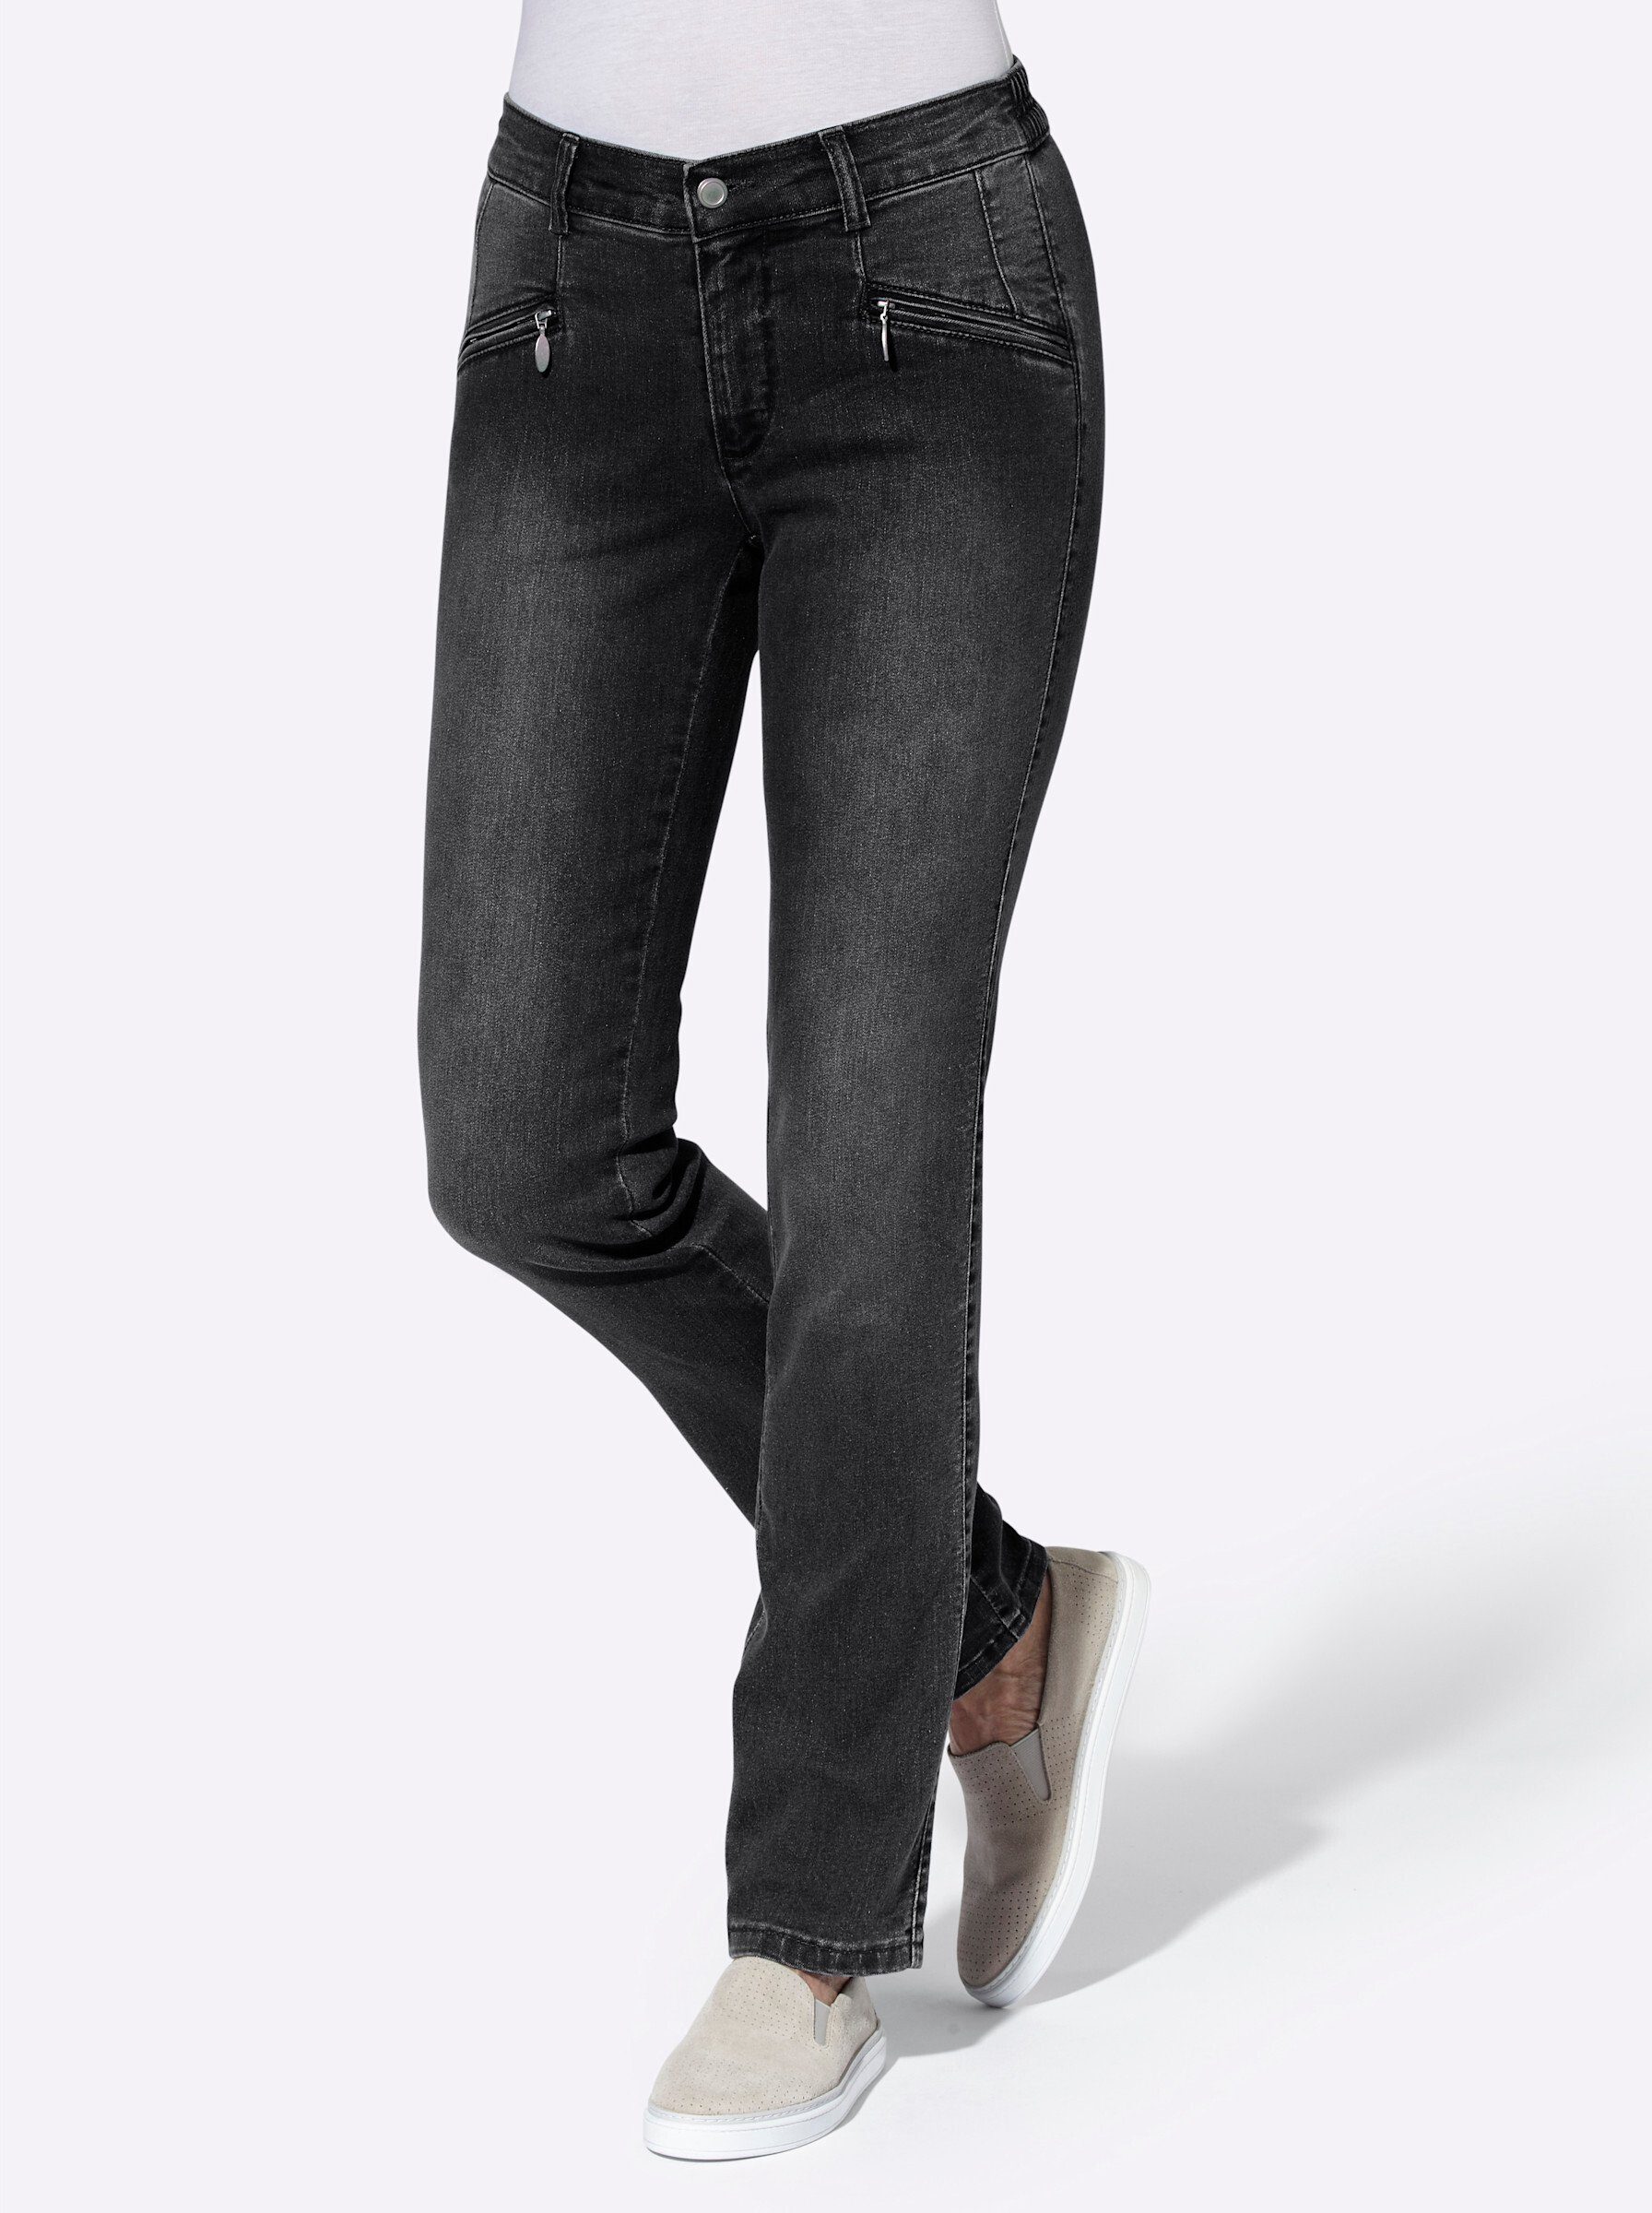 Sieh an! Bequeme Jeans, 2 Reißverschluss-Taschen